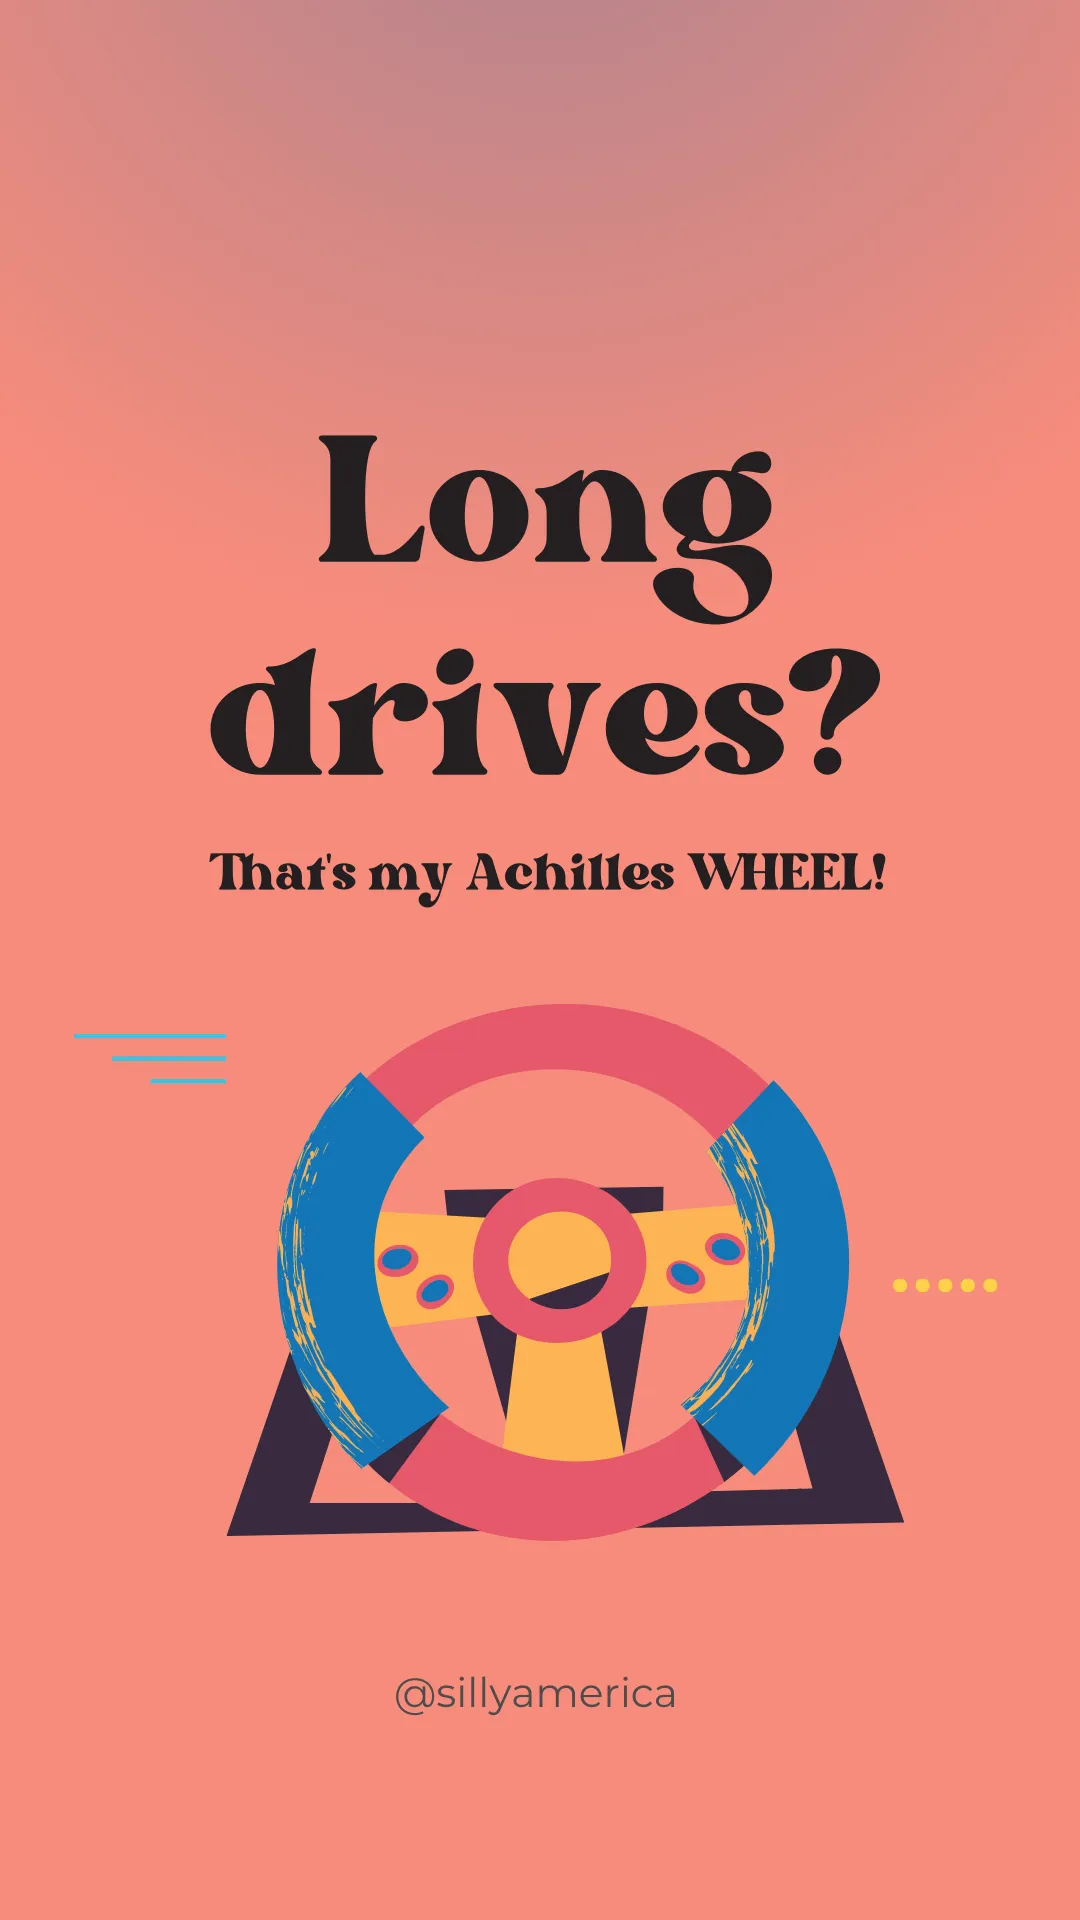 Long drives? That's my Achilles WHEEL! - Road Trip Puns